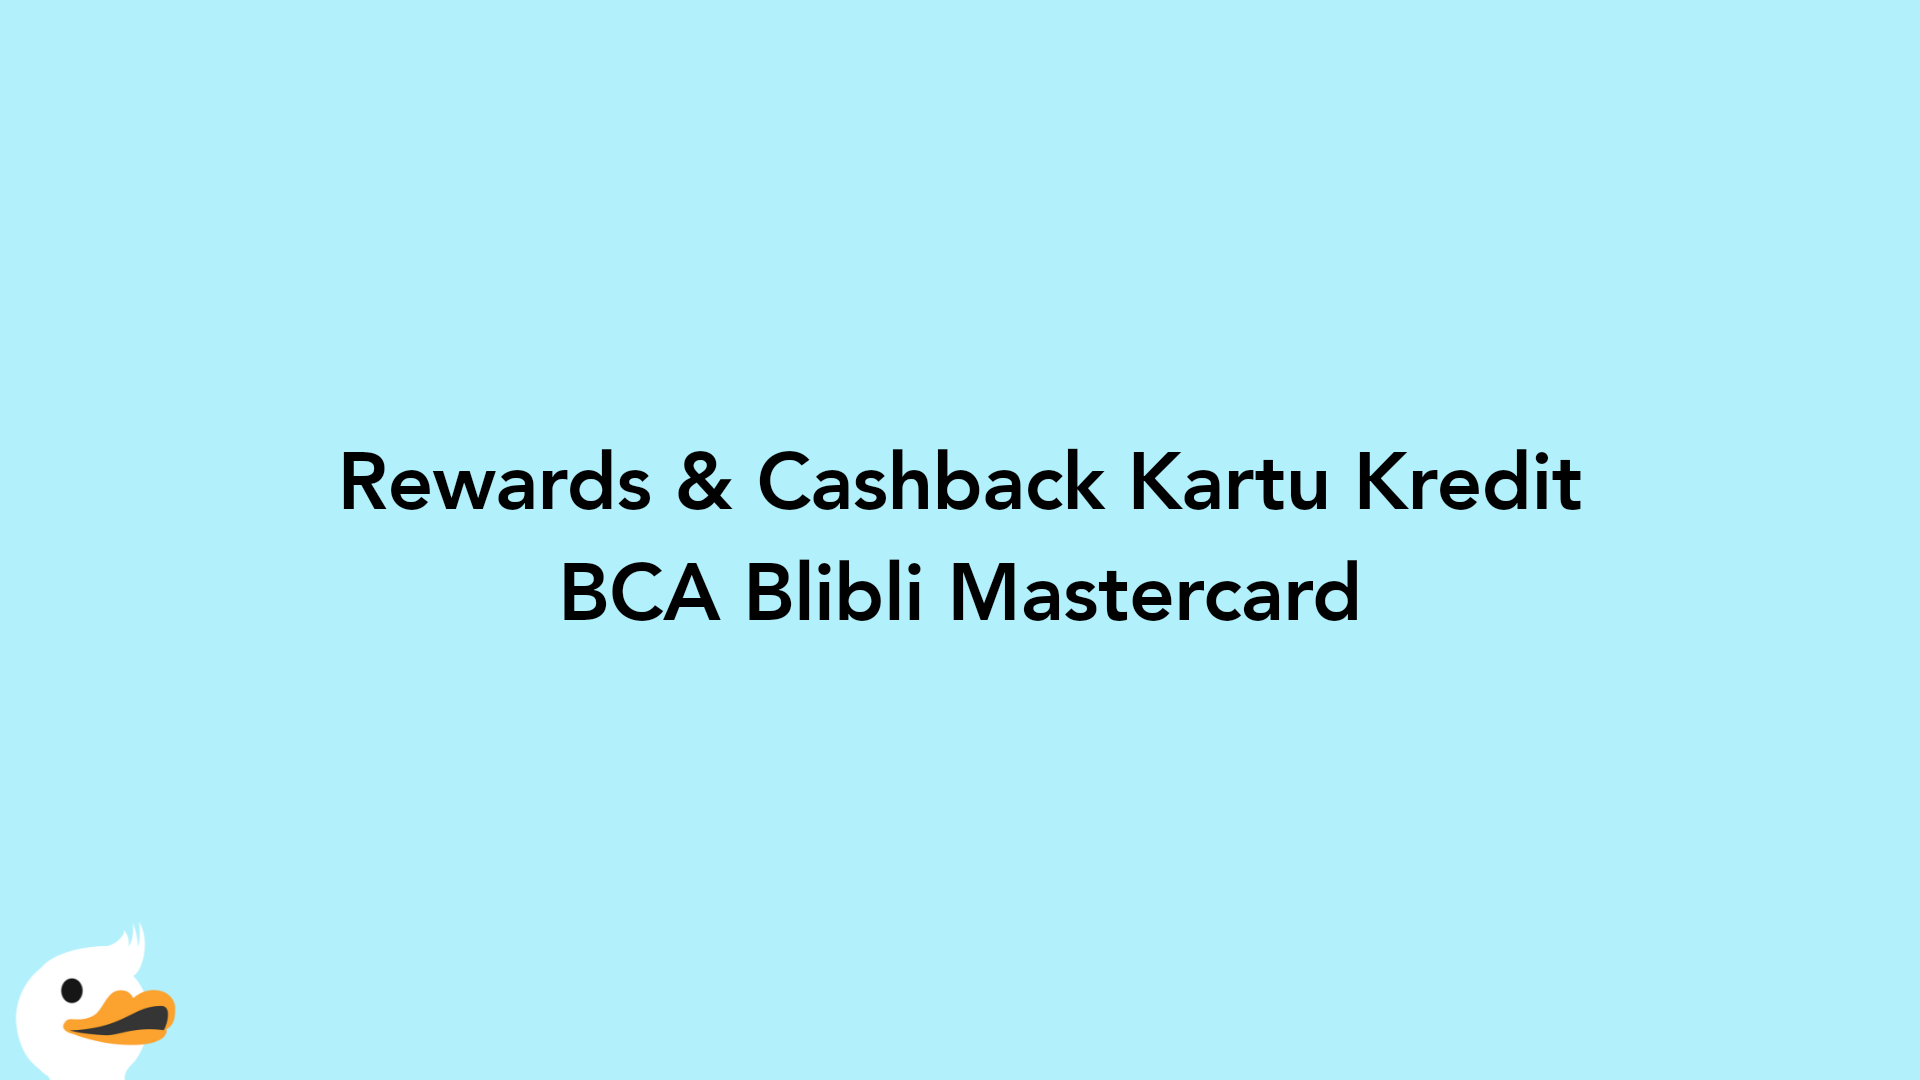 Rewards & Cashback Kartu Kredit BCA Blibli Mastercard